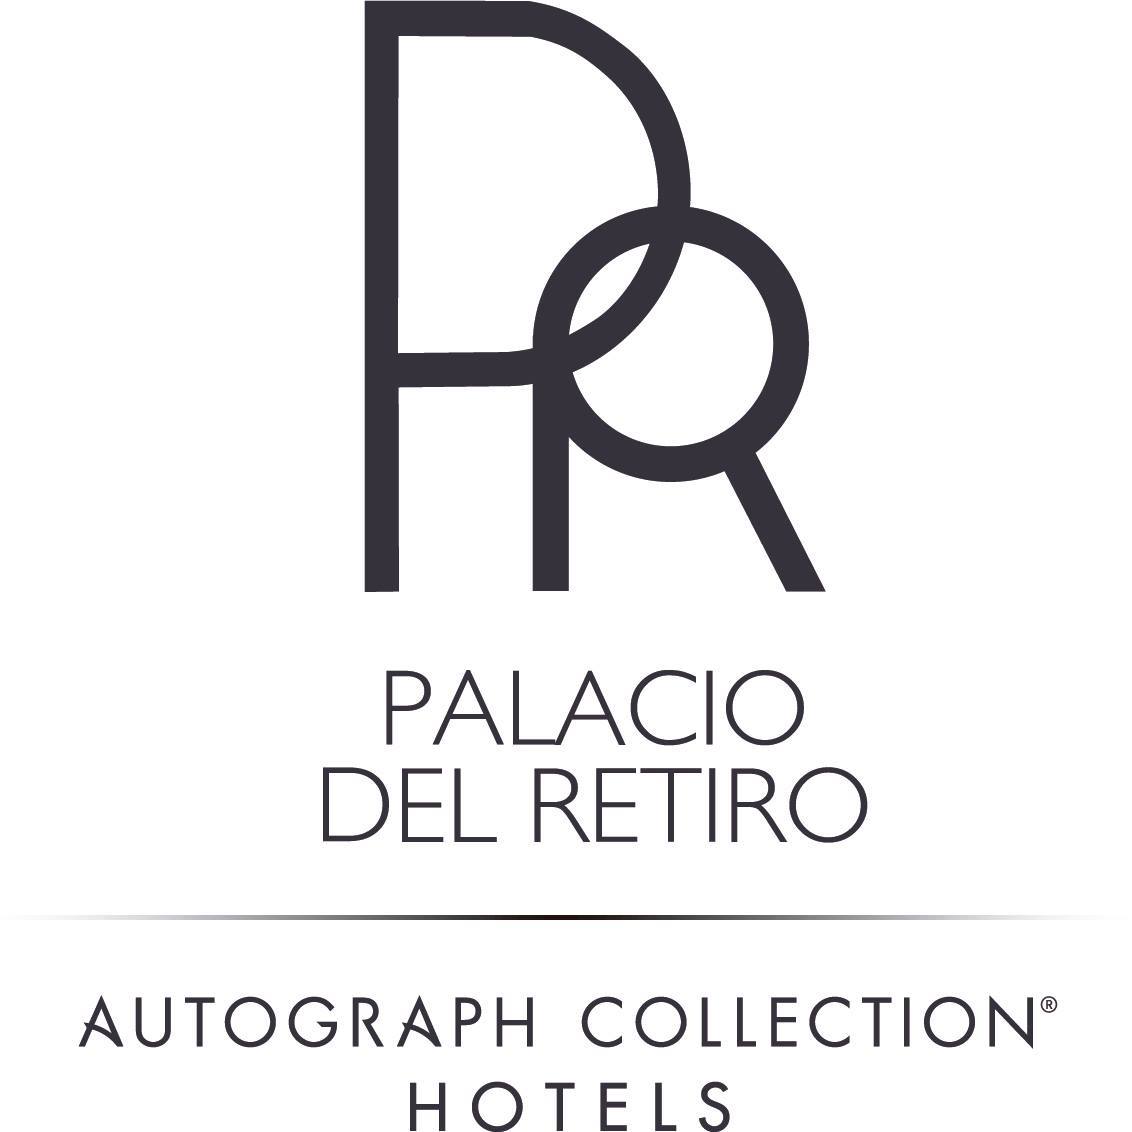 Hotel Palacio Del Retiro, Autograph Collection, Spain